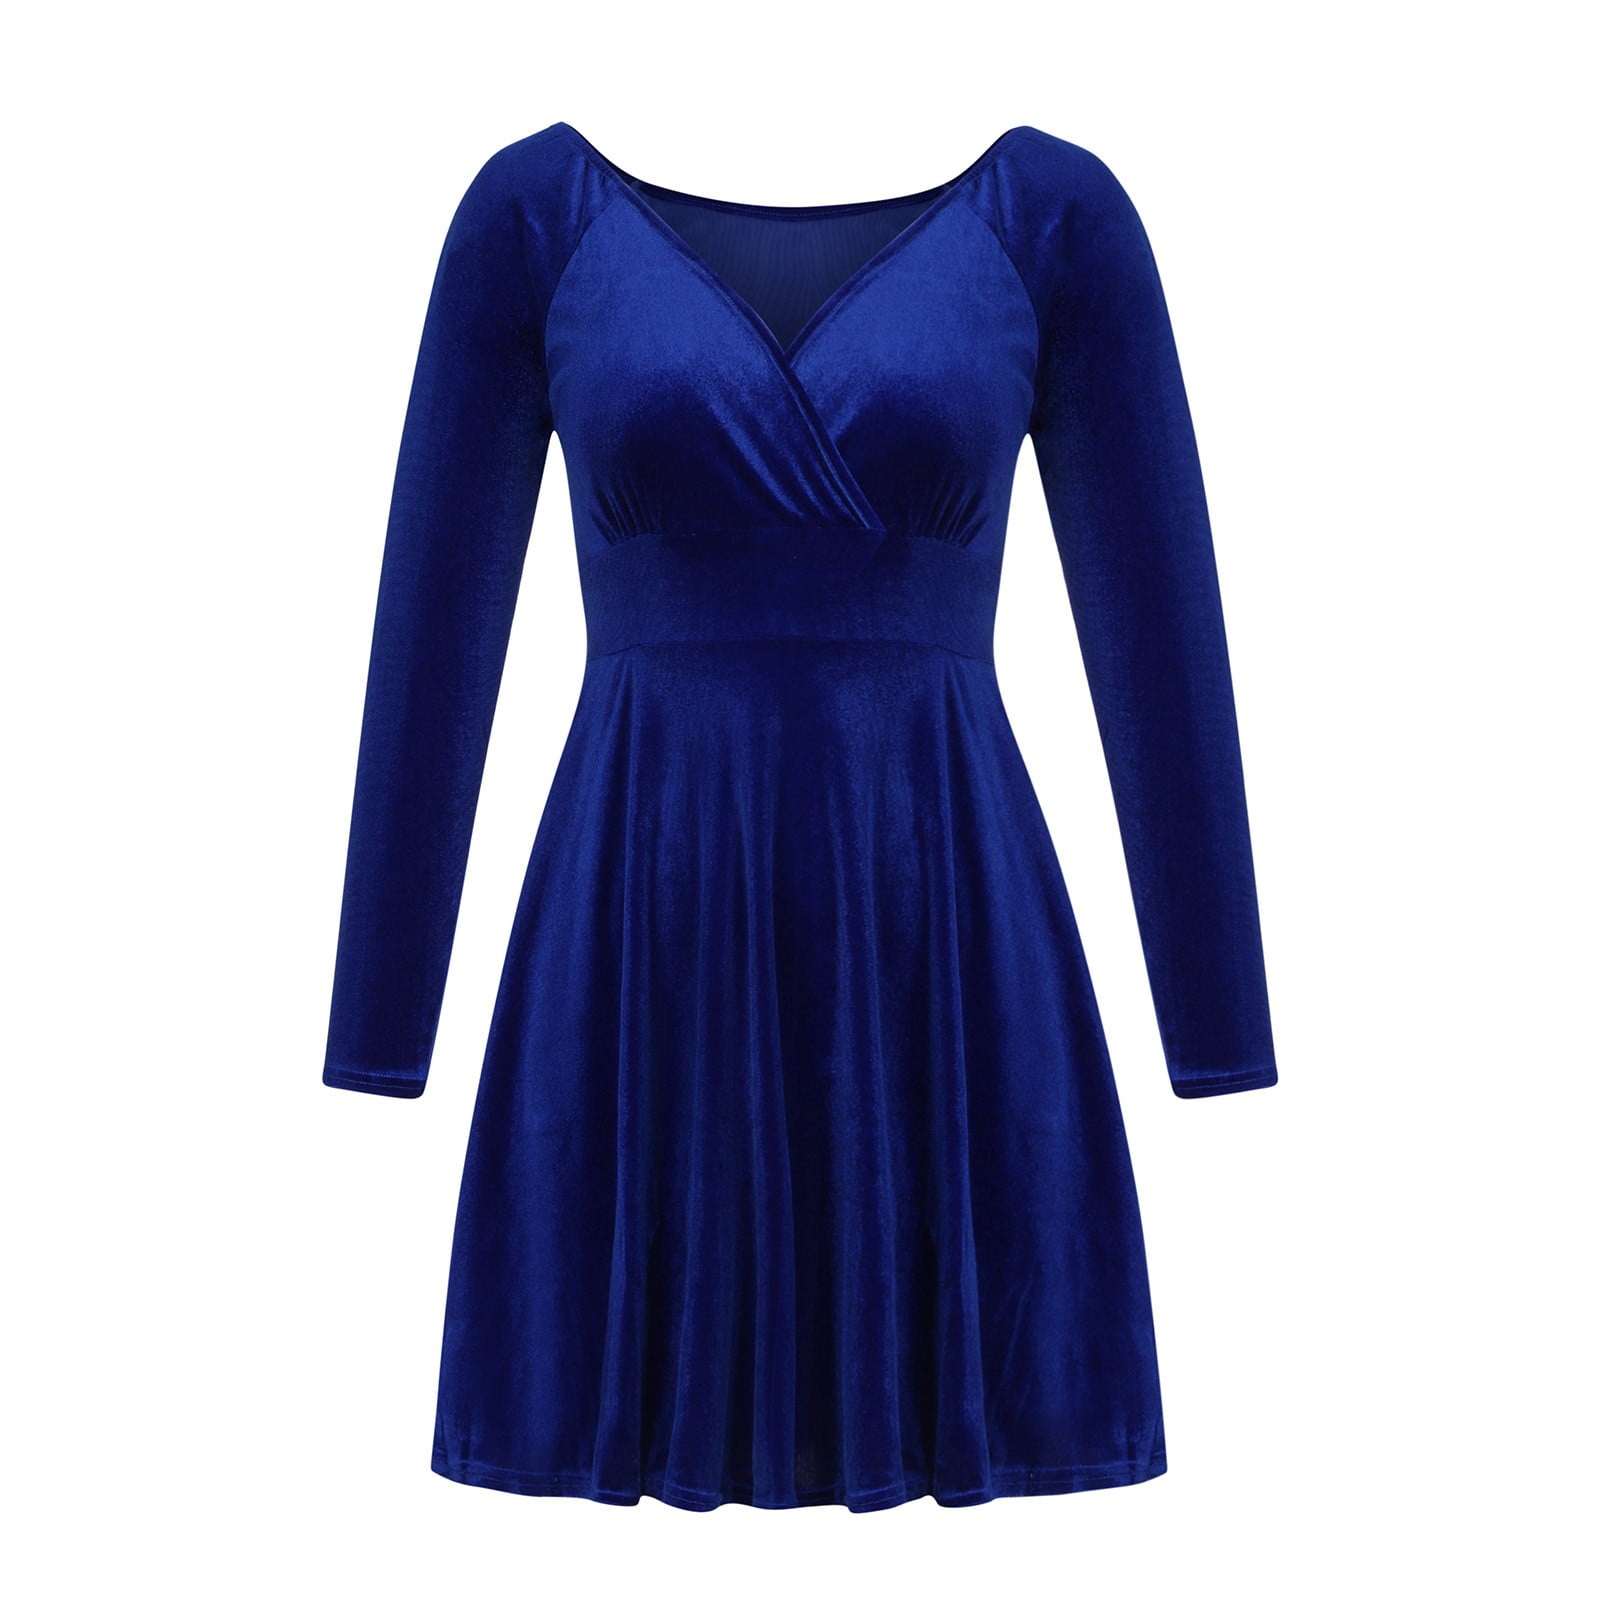 Eightree Simple Blue Velvet Evening Dresses Long Sleeves High Neck